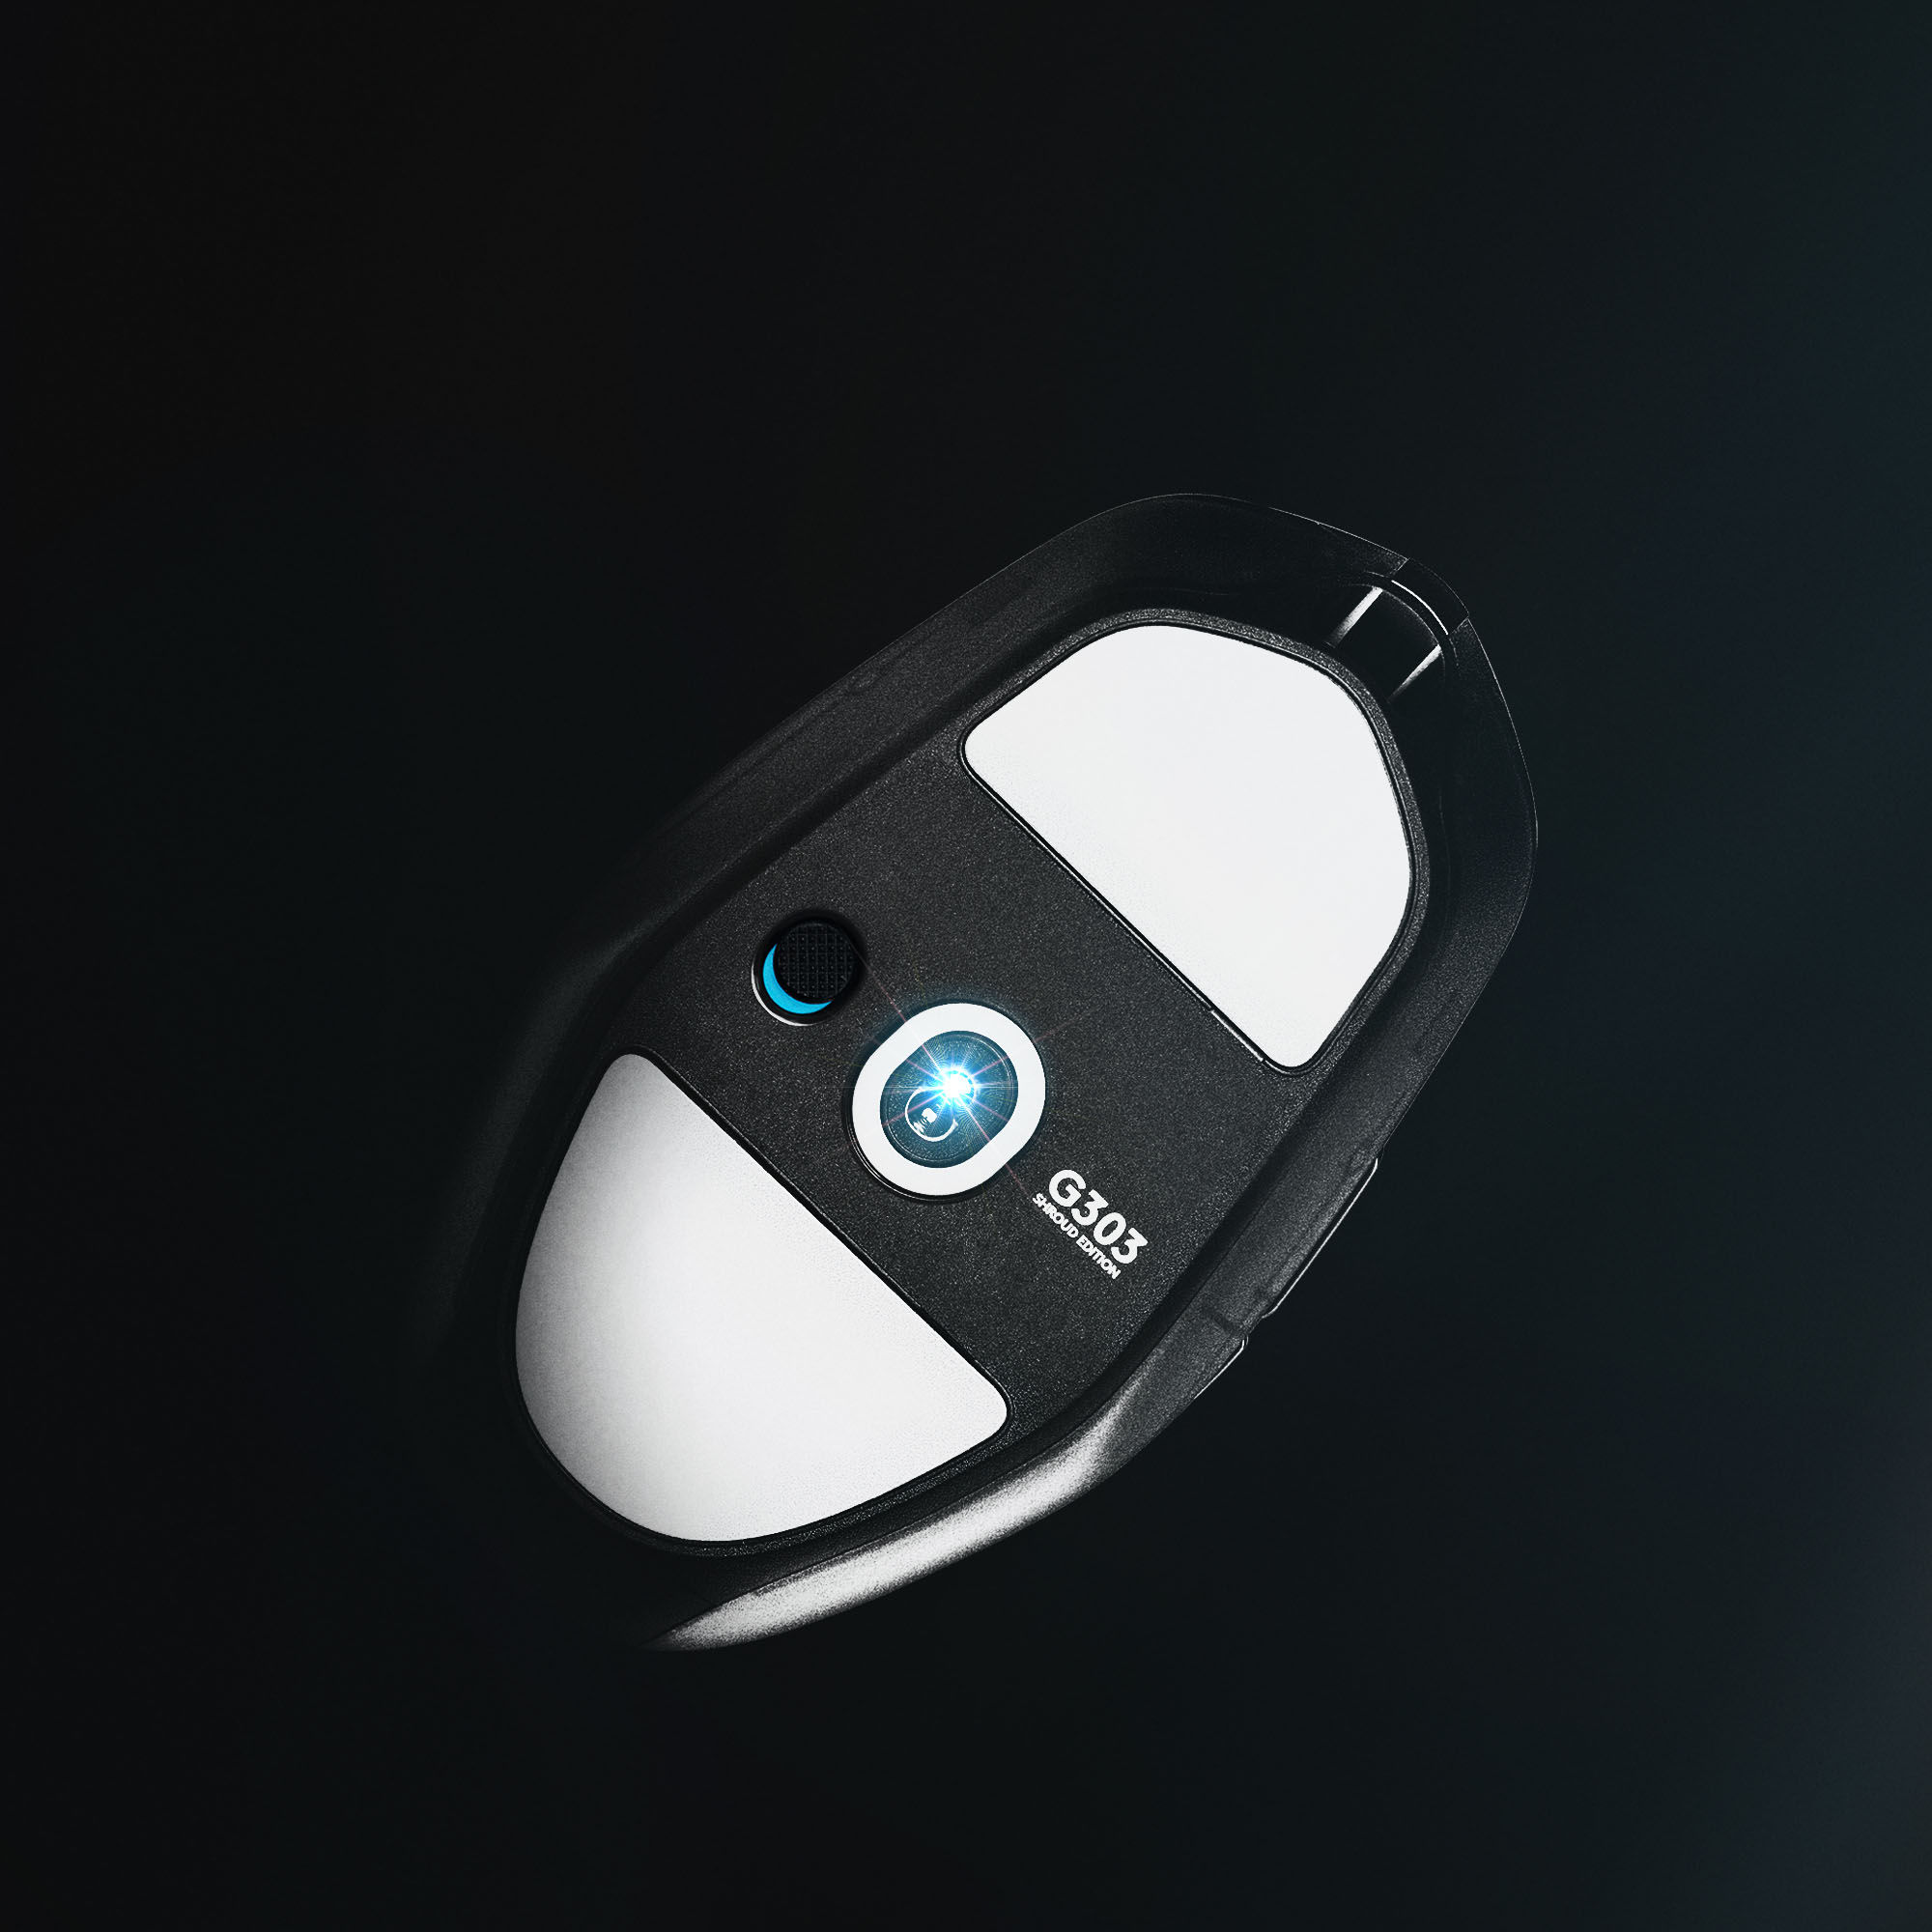 Logitech G303 Shroud Edition Lightweight Wireless Optical Gaming Mouse with 25K HERO sensor 910-006103 - Best Buy